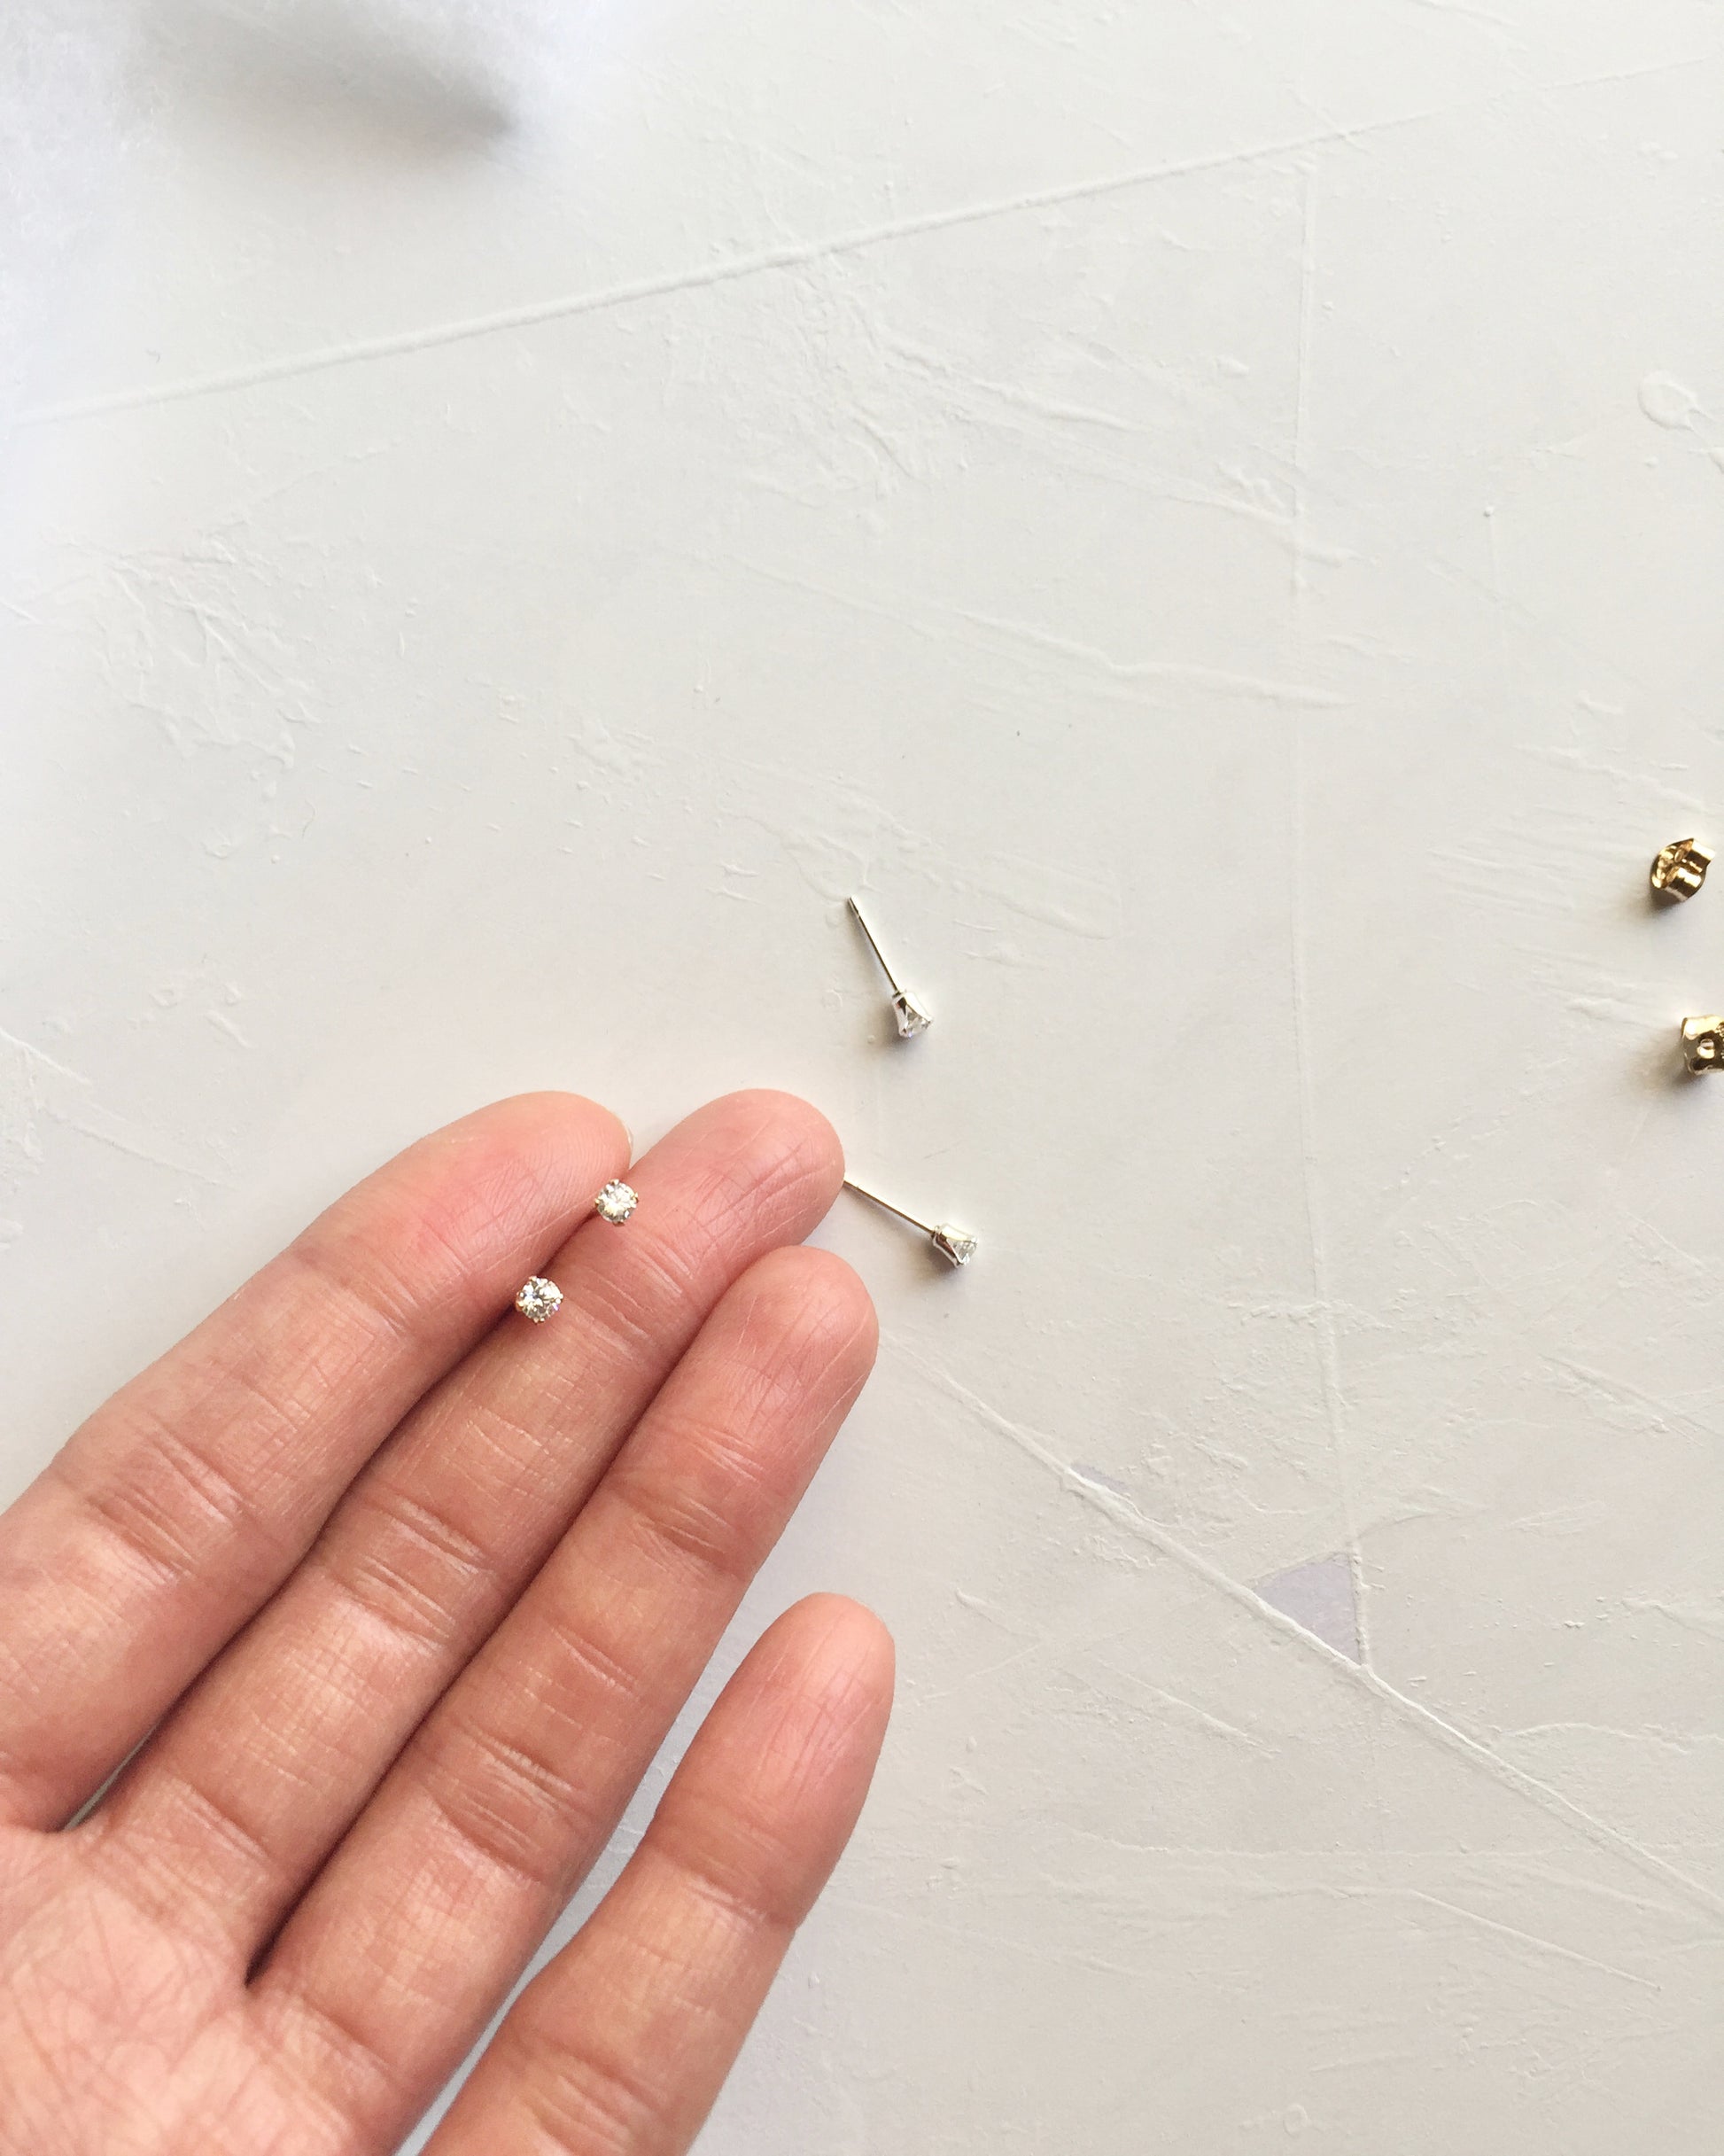 Tiny Cubic Zirconia Stud Earrings | Dainty Stud Earrings In Gold Filled or Sterling Silver | IB Jewelry